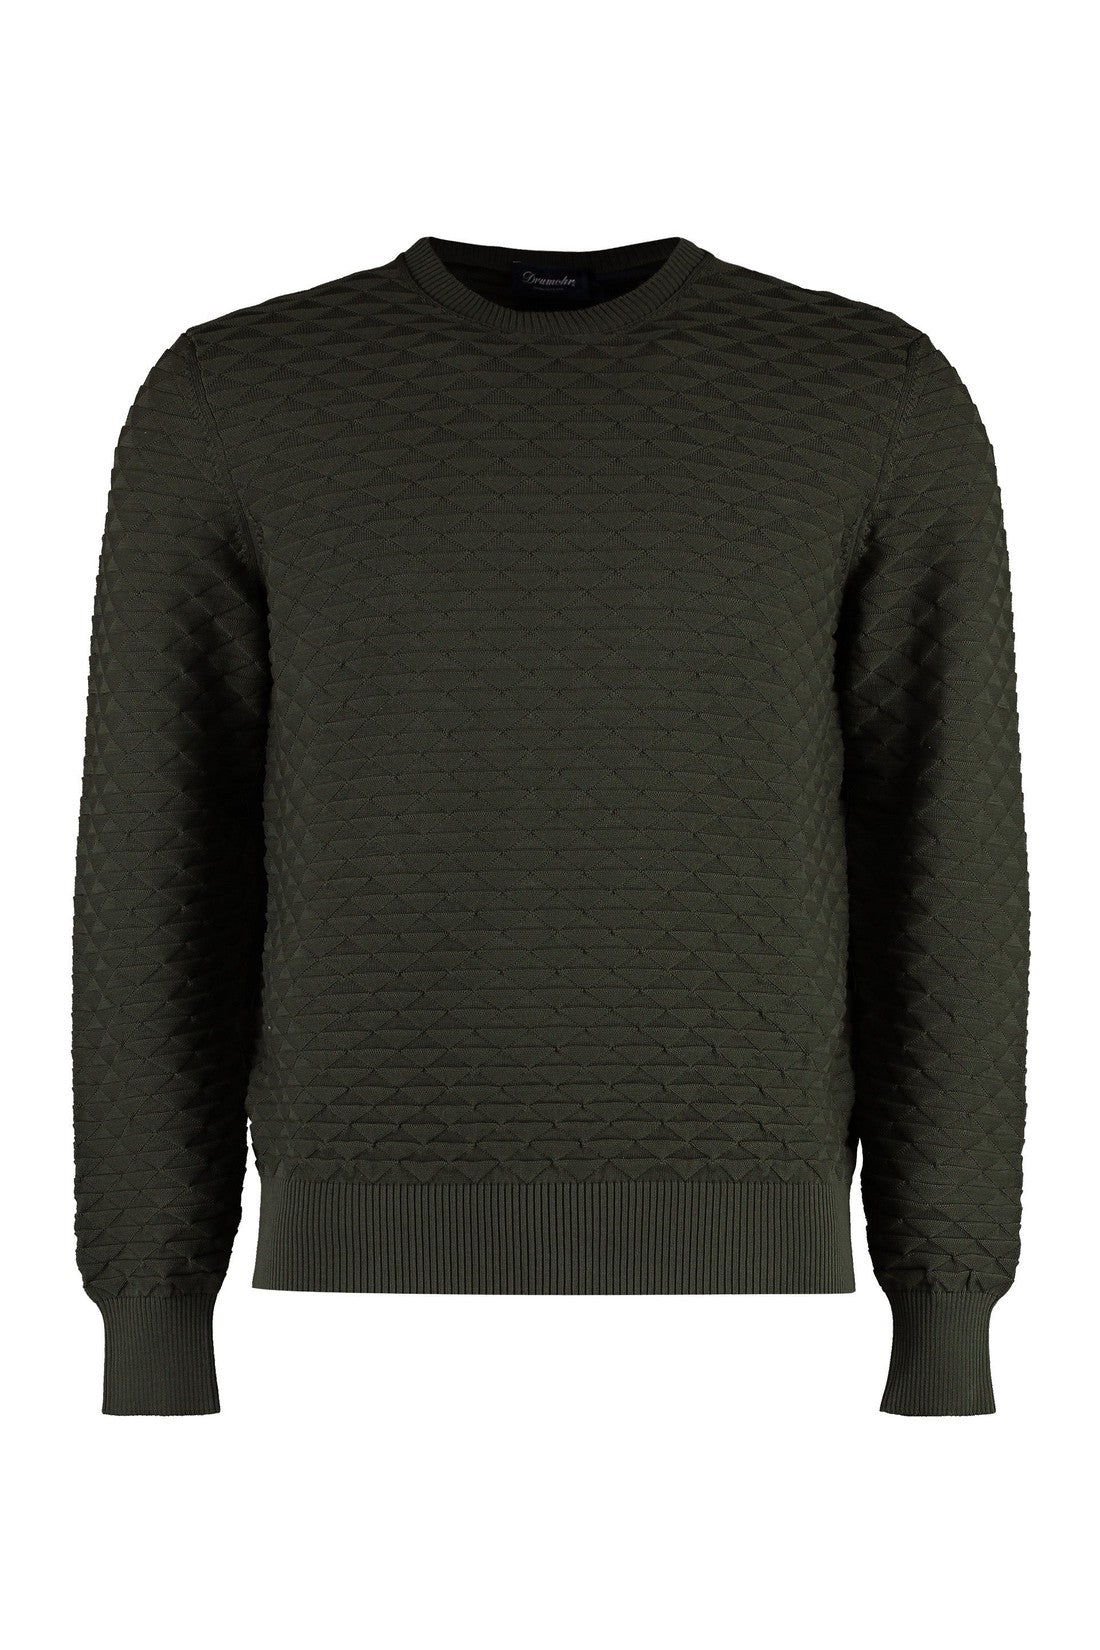 Piralo-OUTLET-SALE-Cotton long sleeve sweater-ARCHIVIST